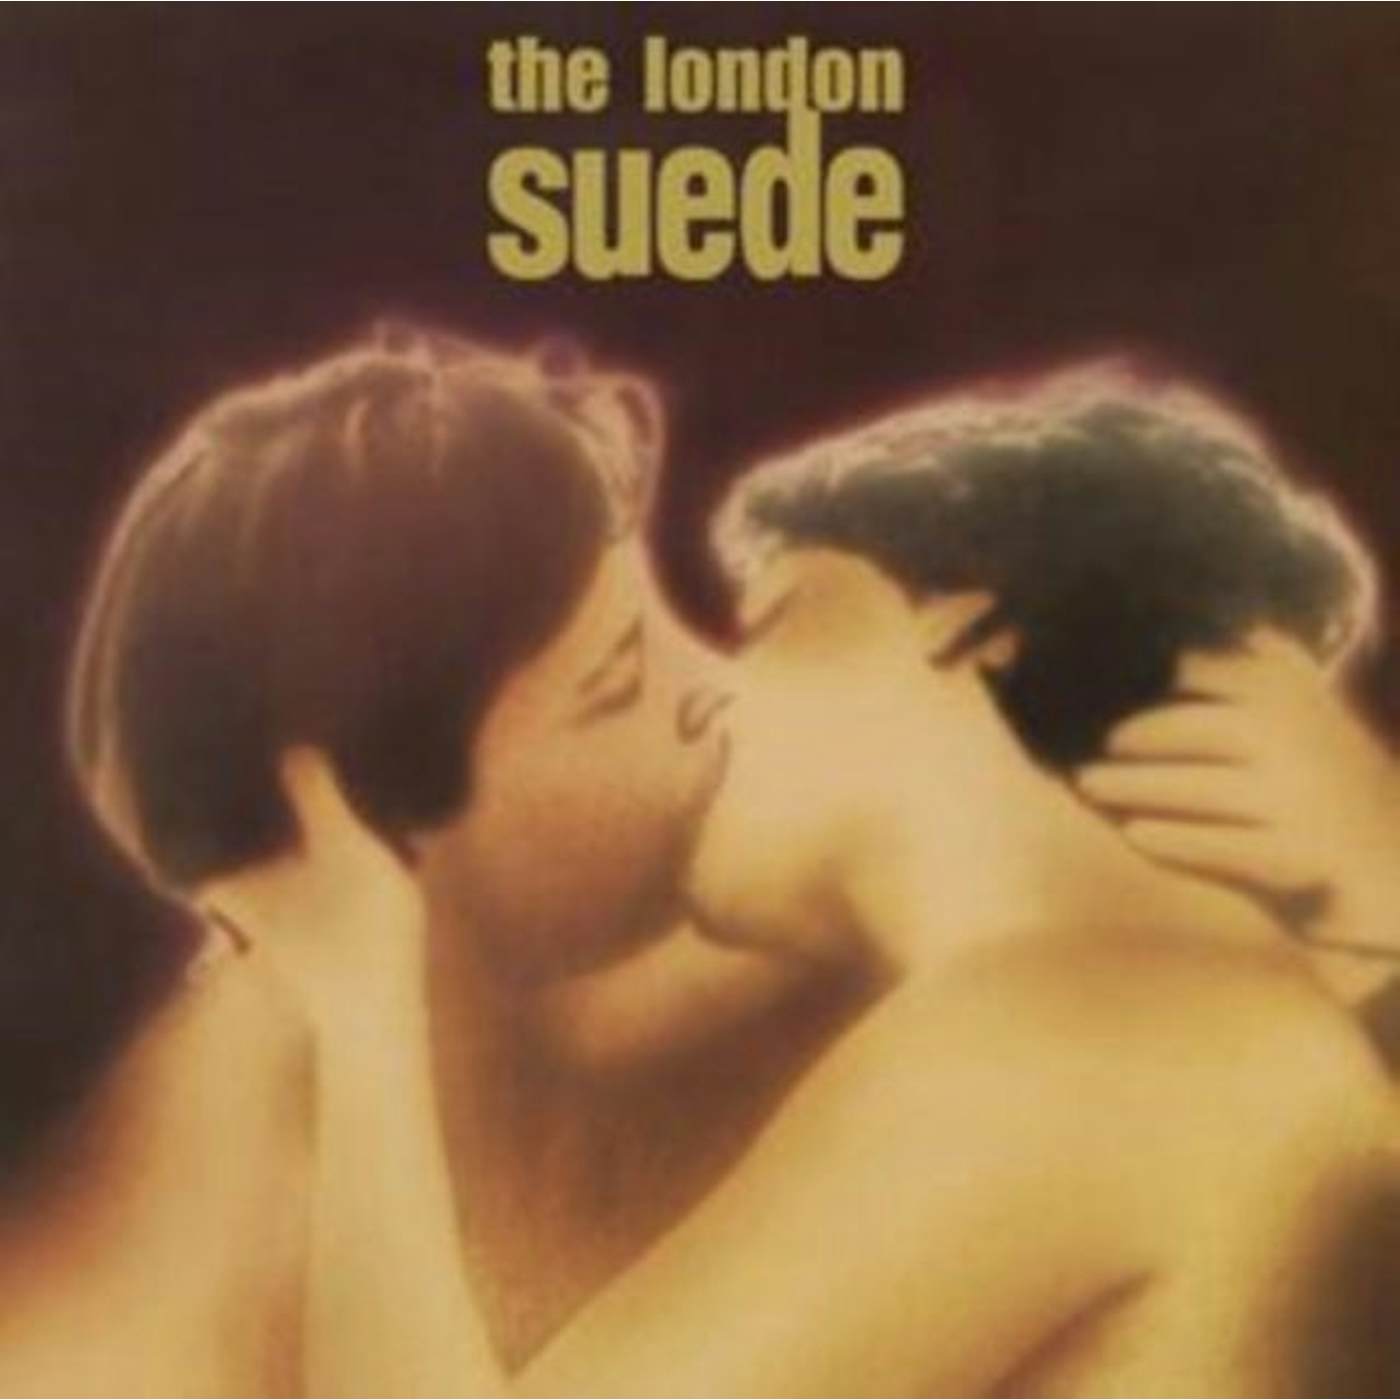 London Suede LP Vinyl Record - The London Suede